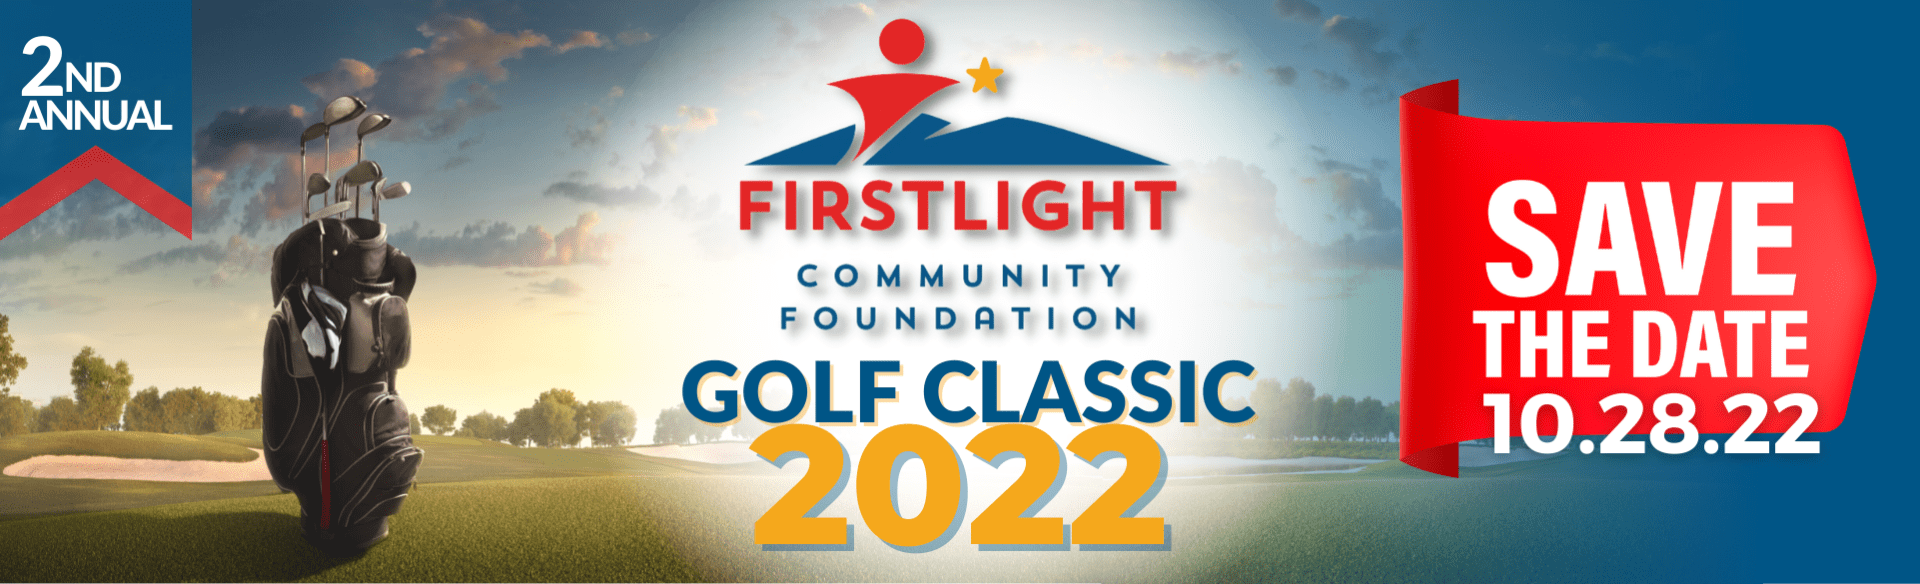 FirstLight Community Foundation